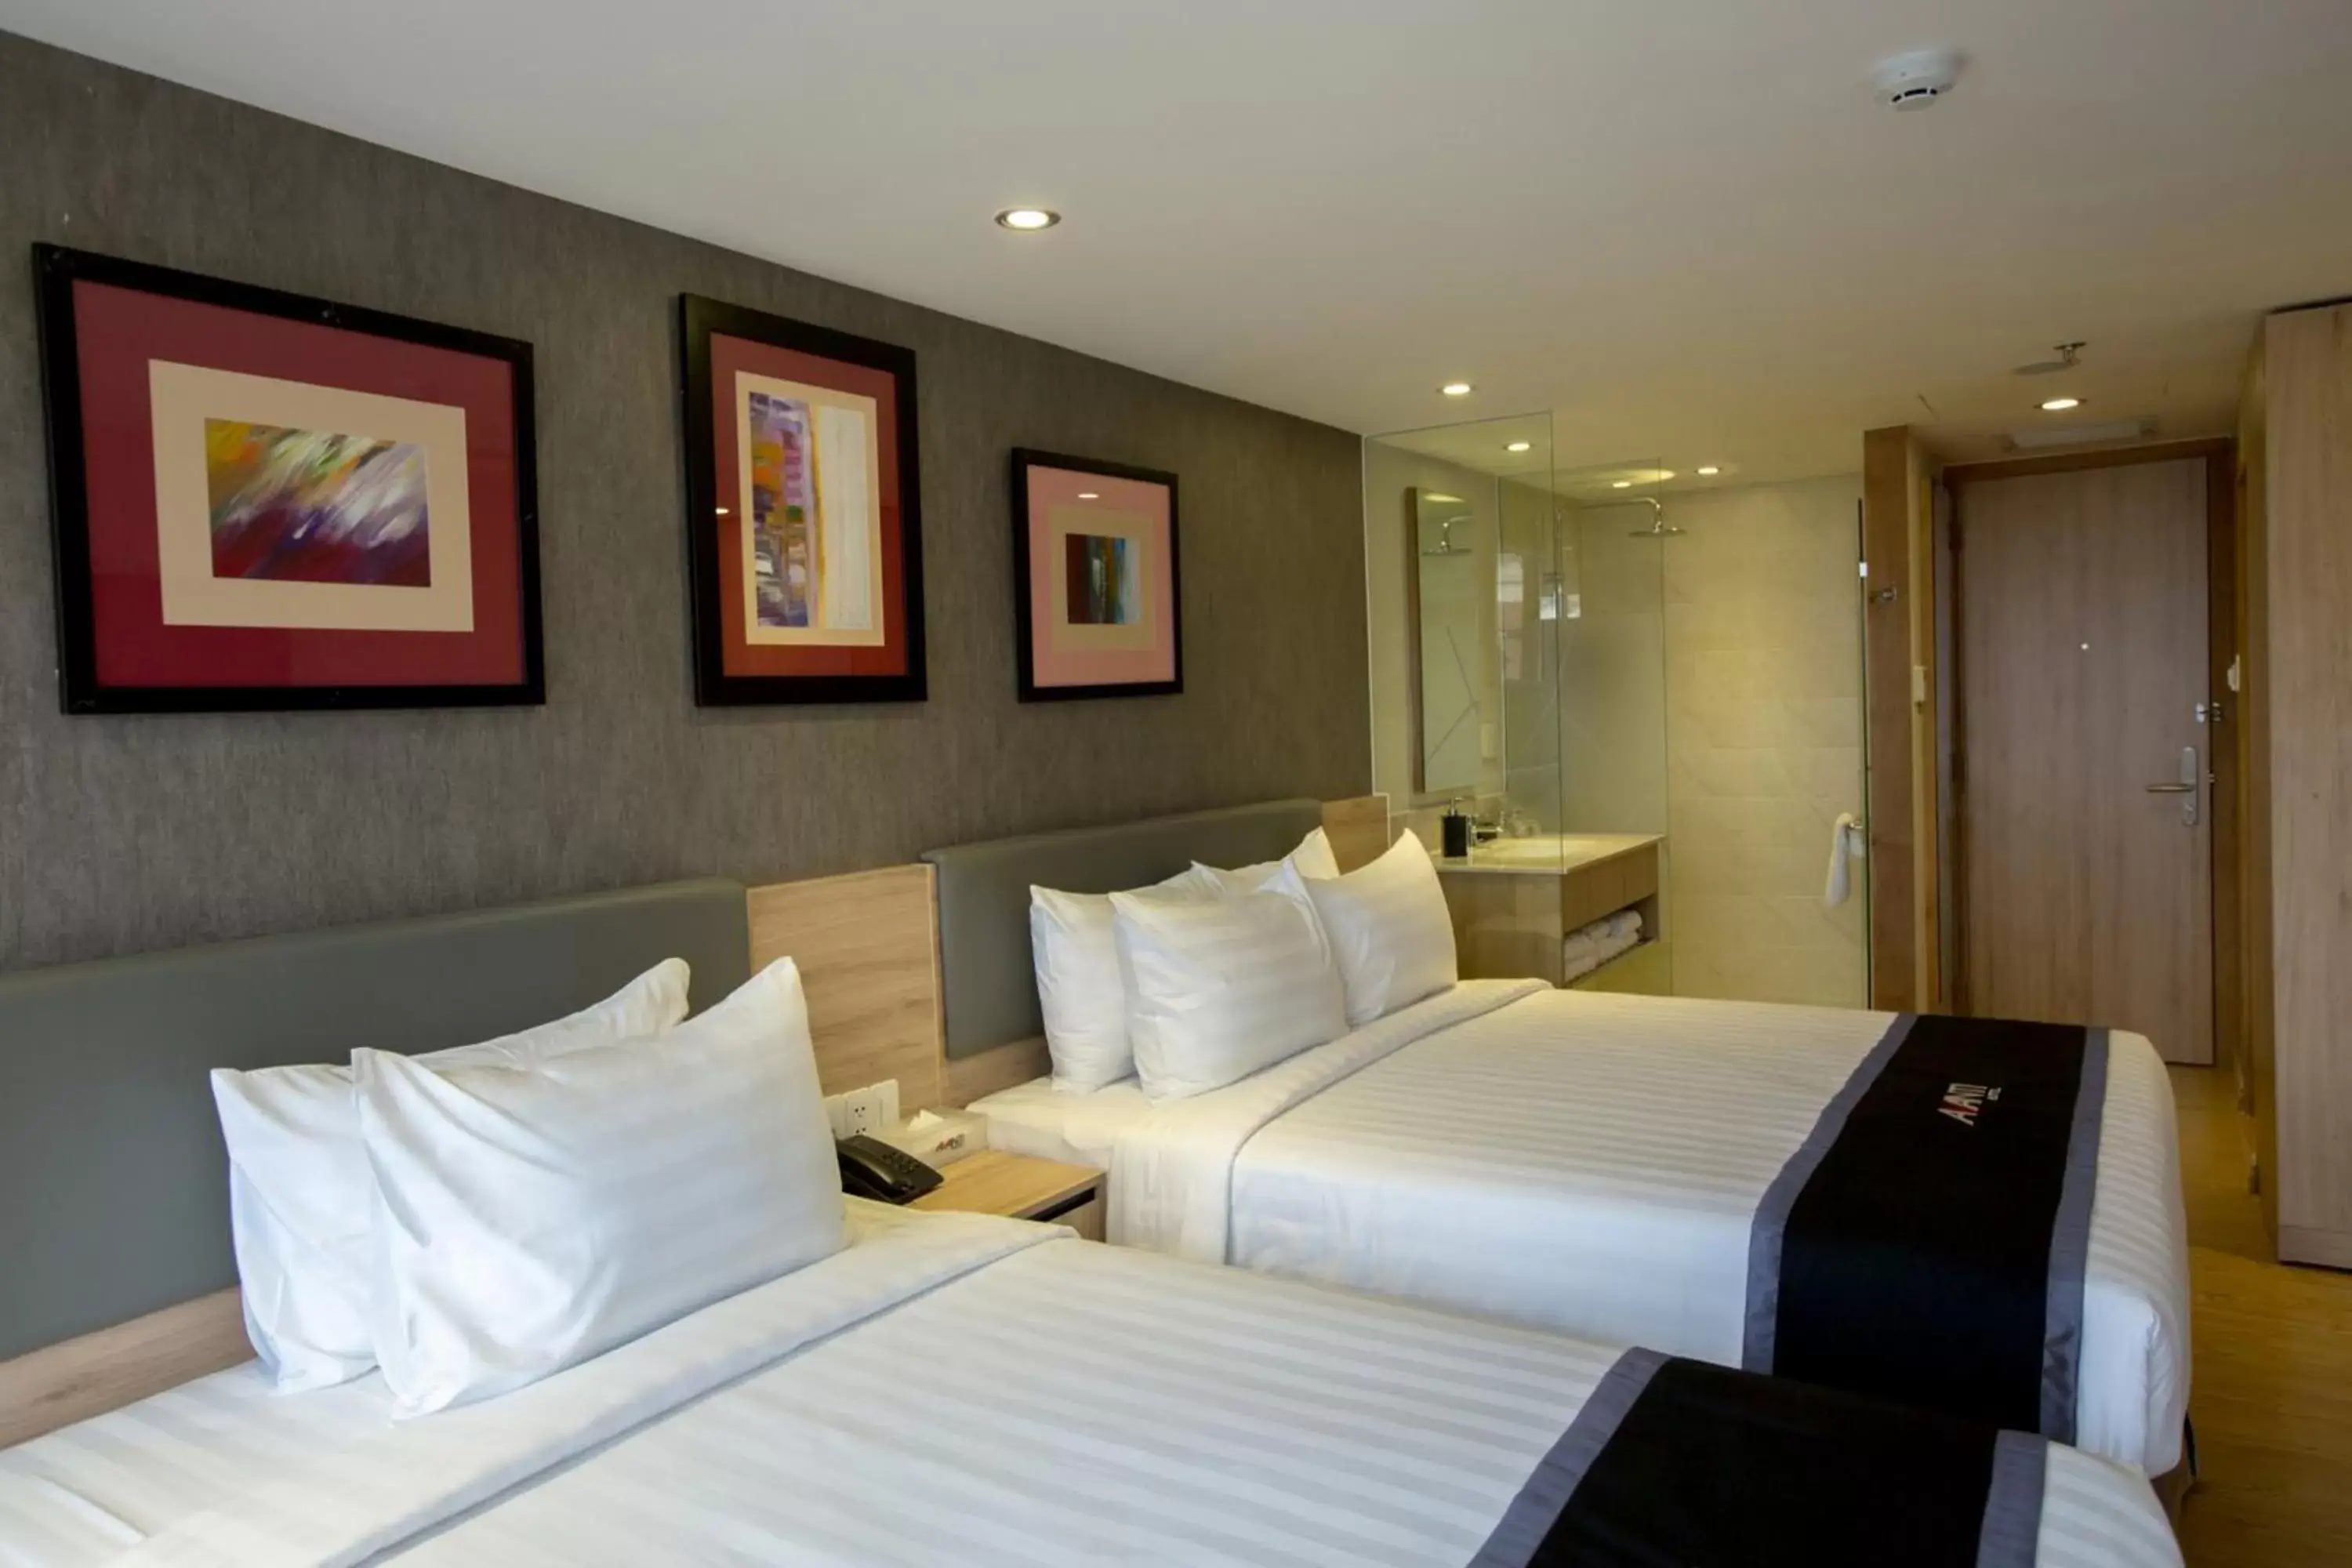 Bed, Room Photo in Avanti Hotel